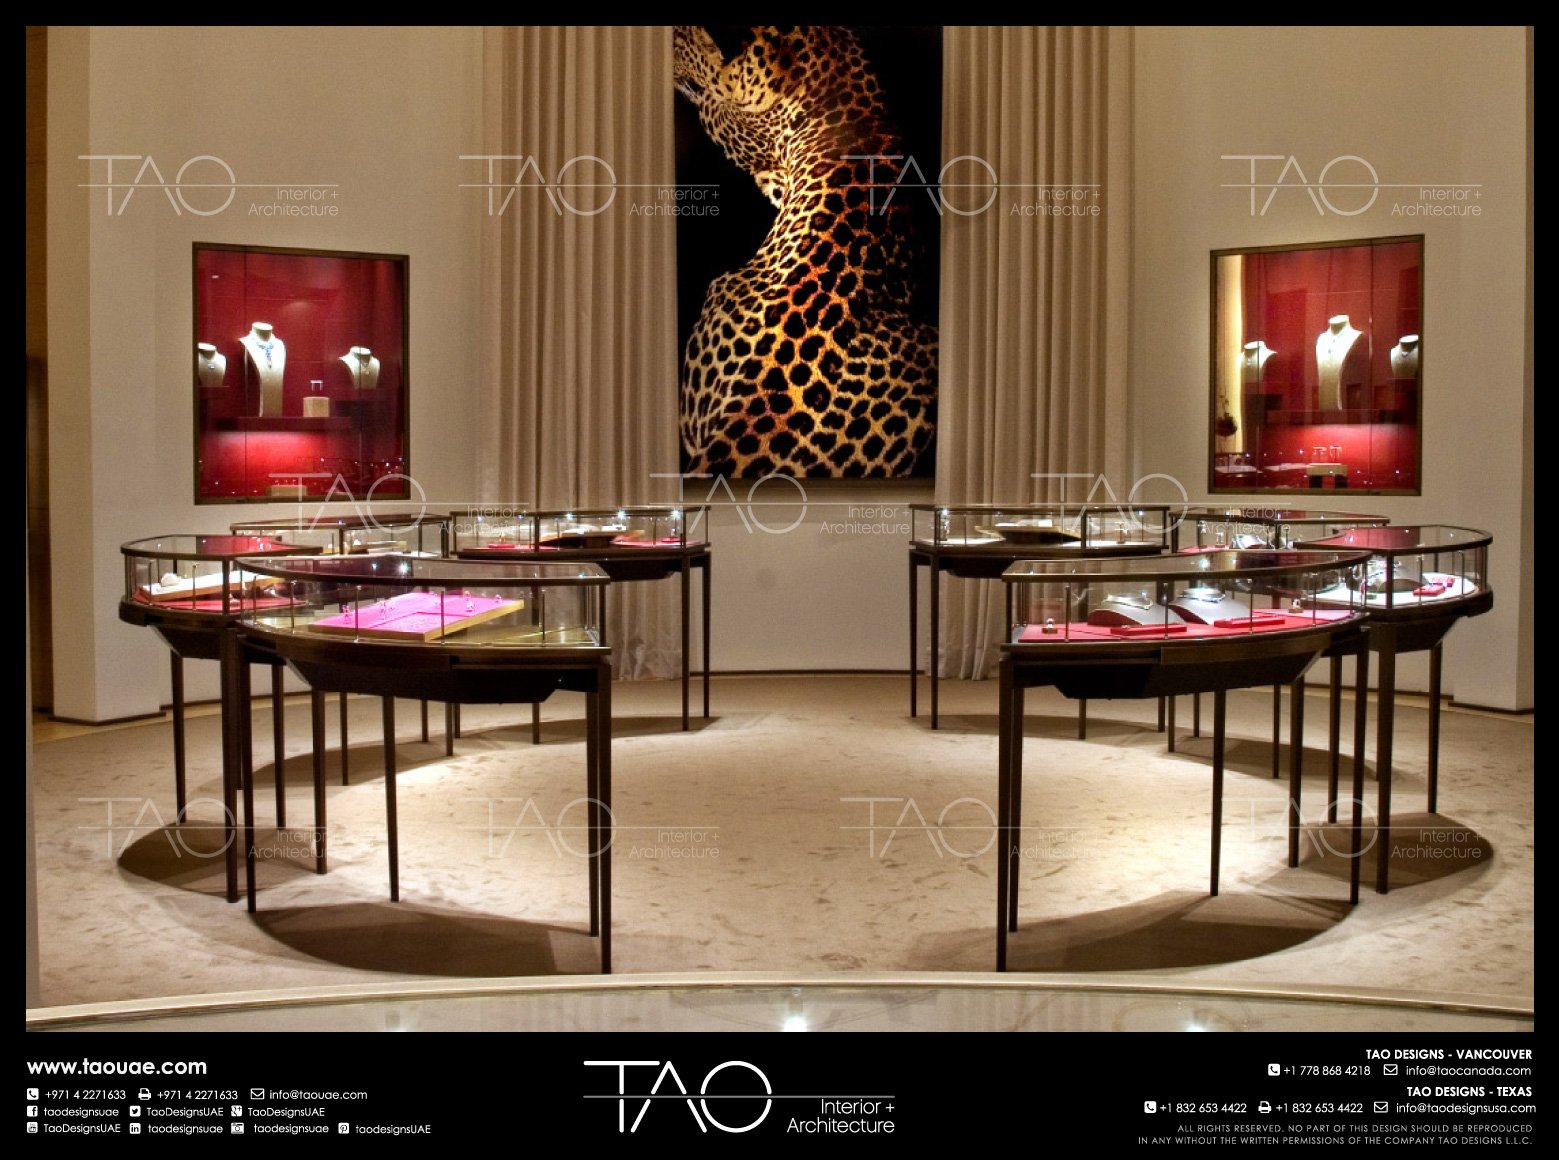 Tao Designs on X: Cartier shop interior in The Dubai Mall @TaoDesignsUAE  #shopinterior #retailinterior #interiordesign #retaildisplay    / X